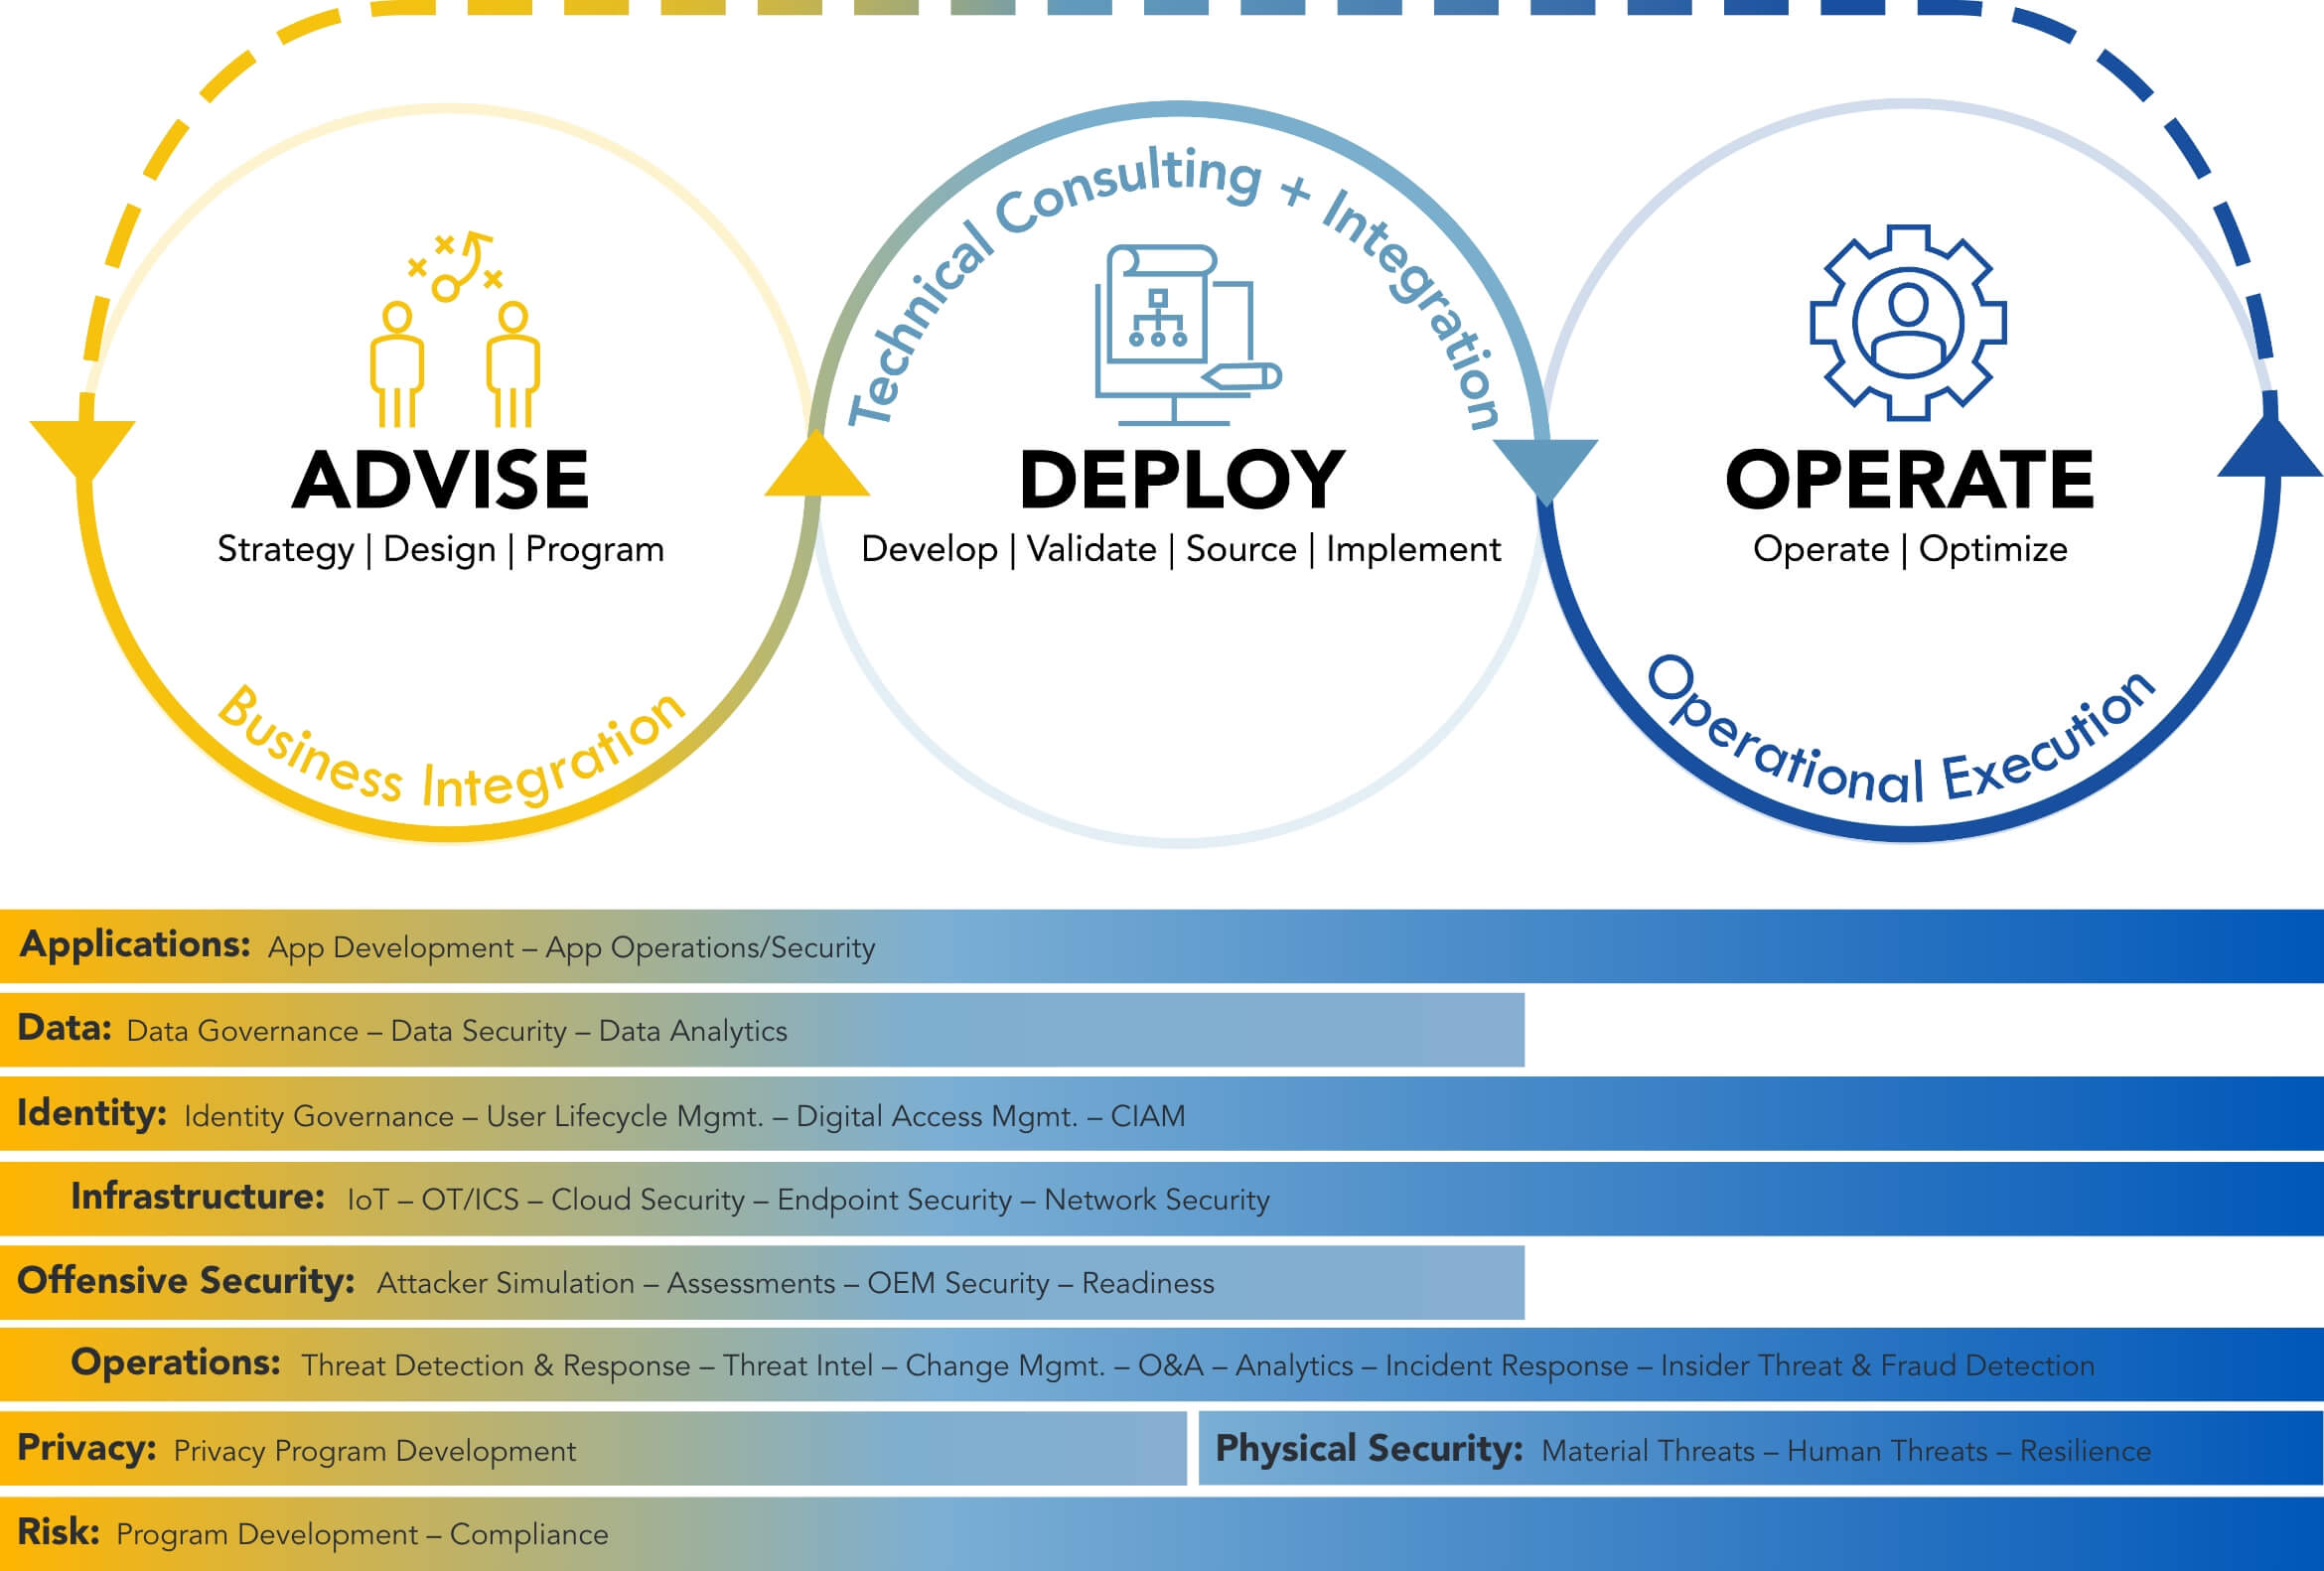 optiv-service-capabilities-diagram@2x